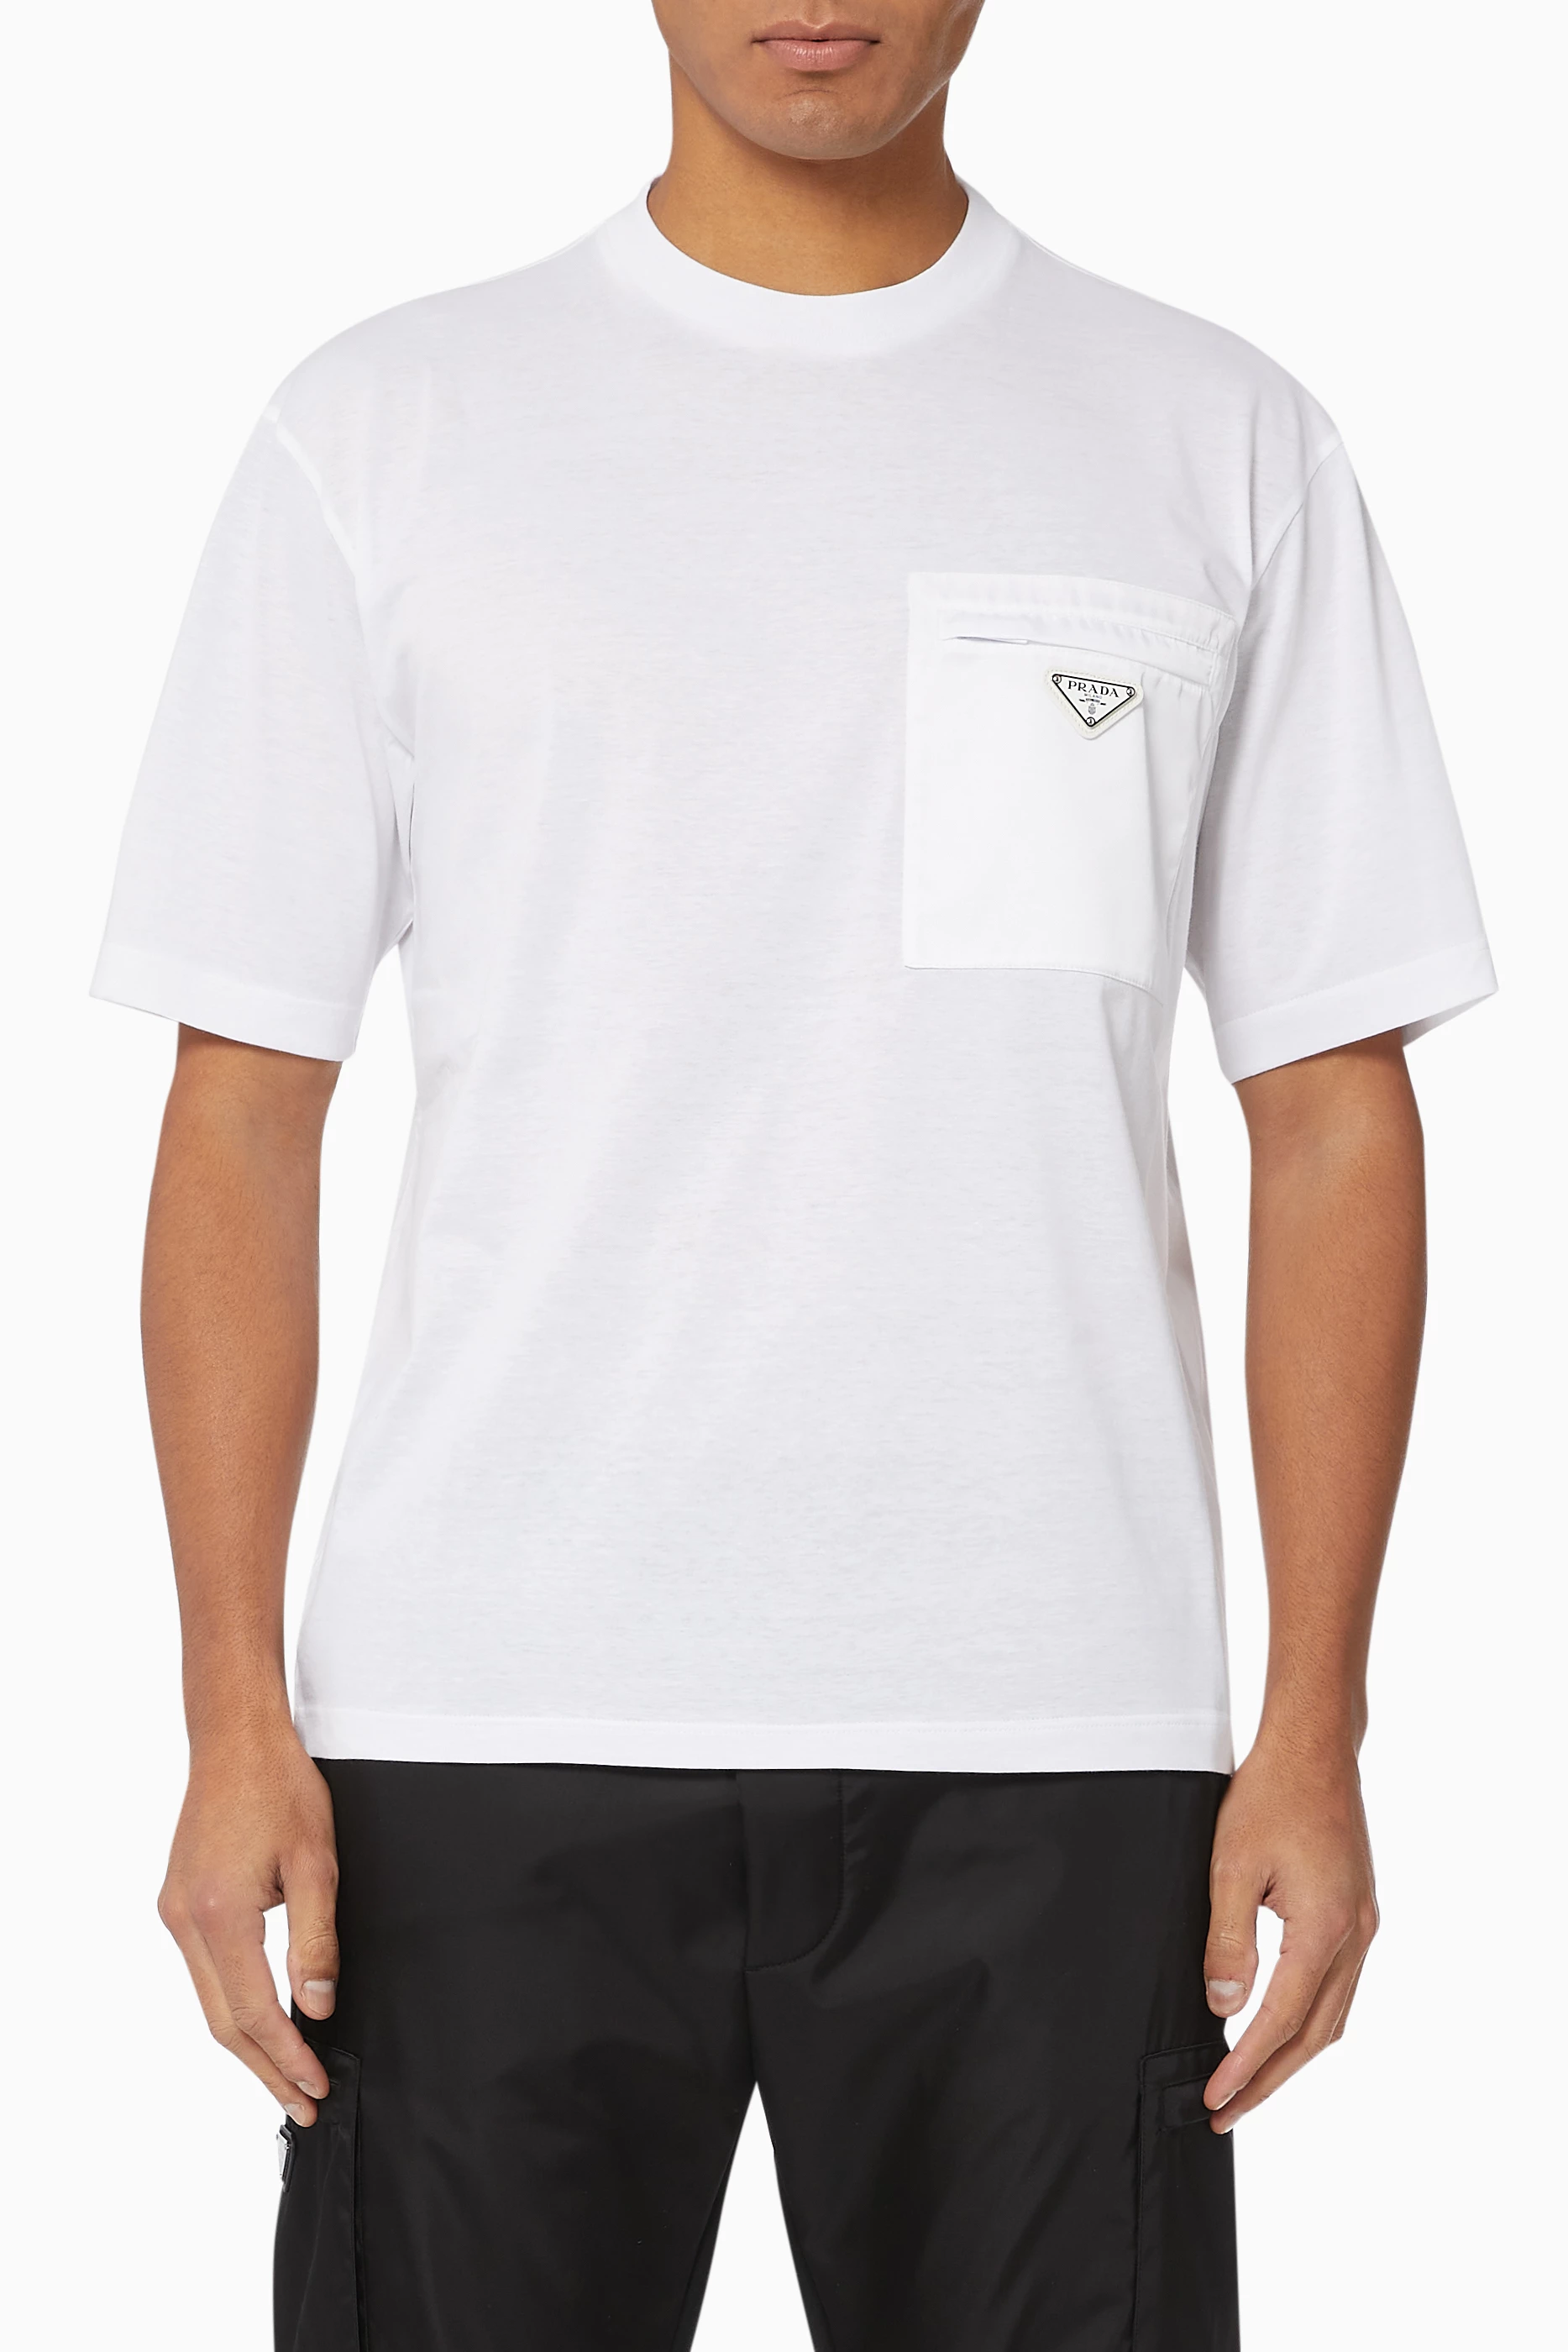 Shop Prada White Triangle Logo Nylon Pocket T-Shirt for MEN | Ounass Kuwait